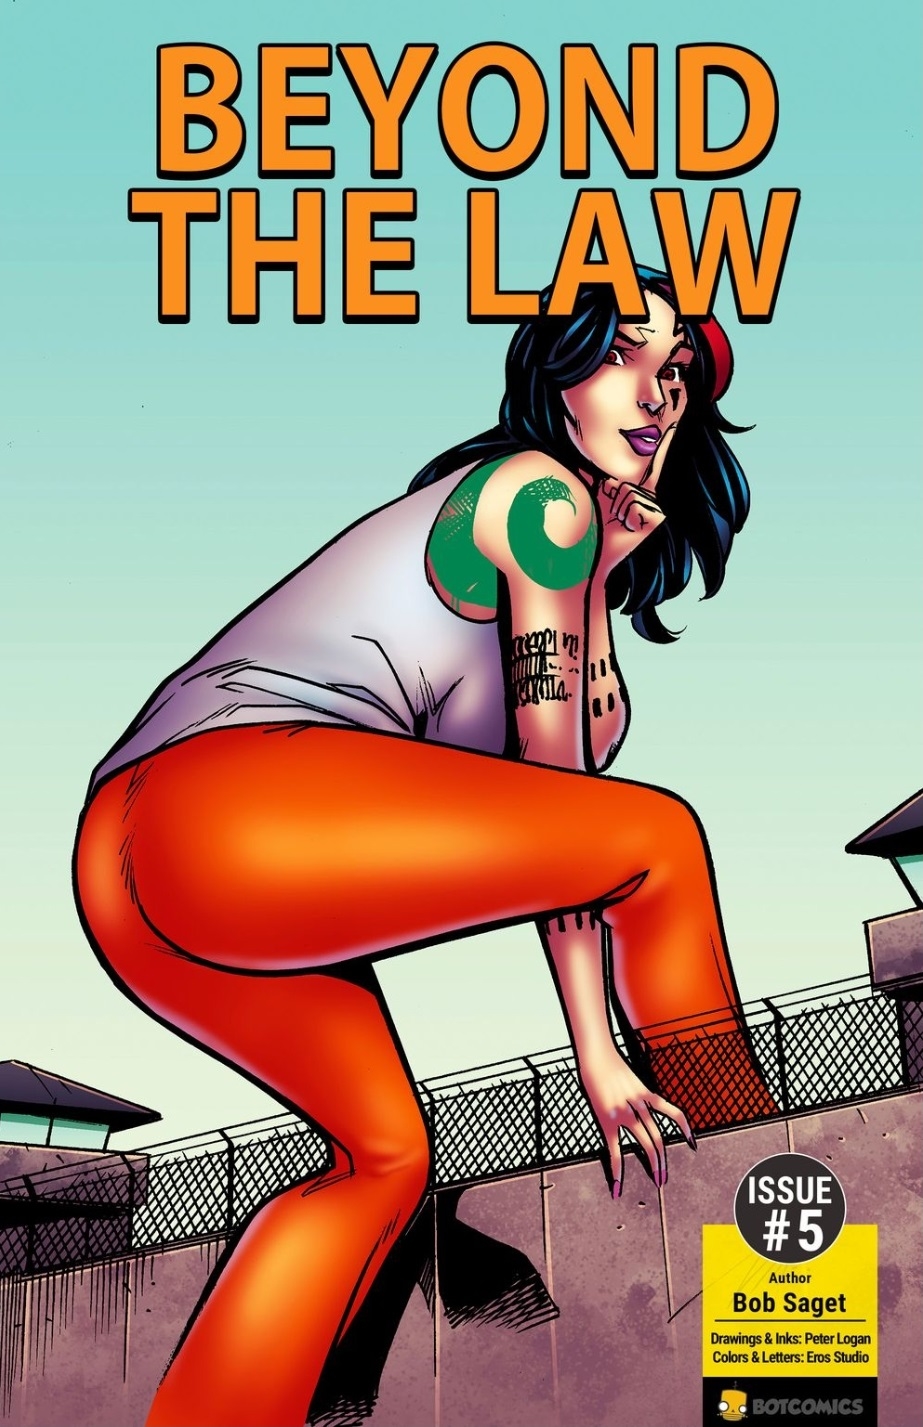 Beyond The Law 5 by Bob Saget